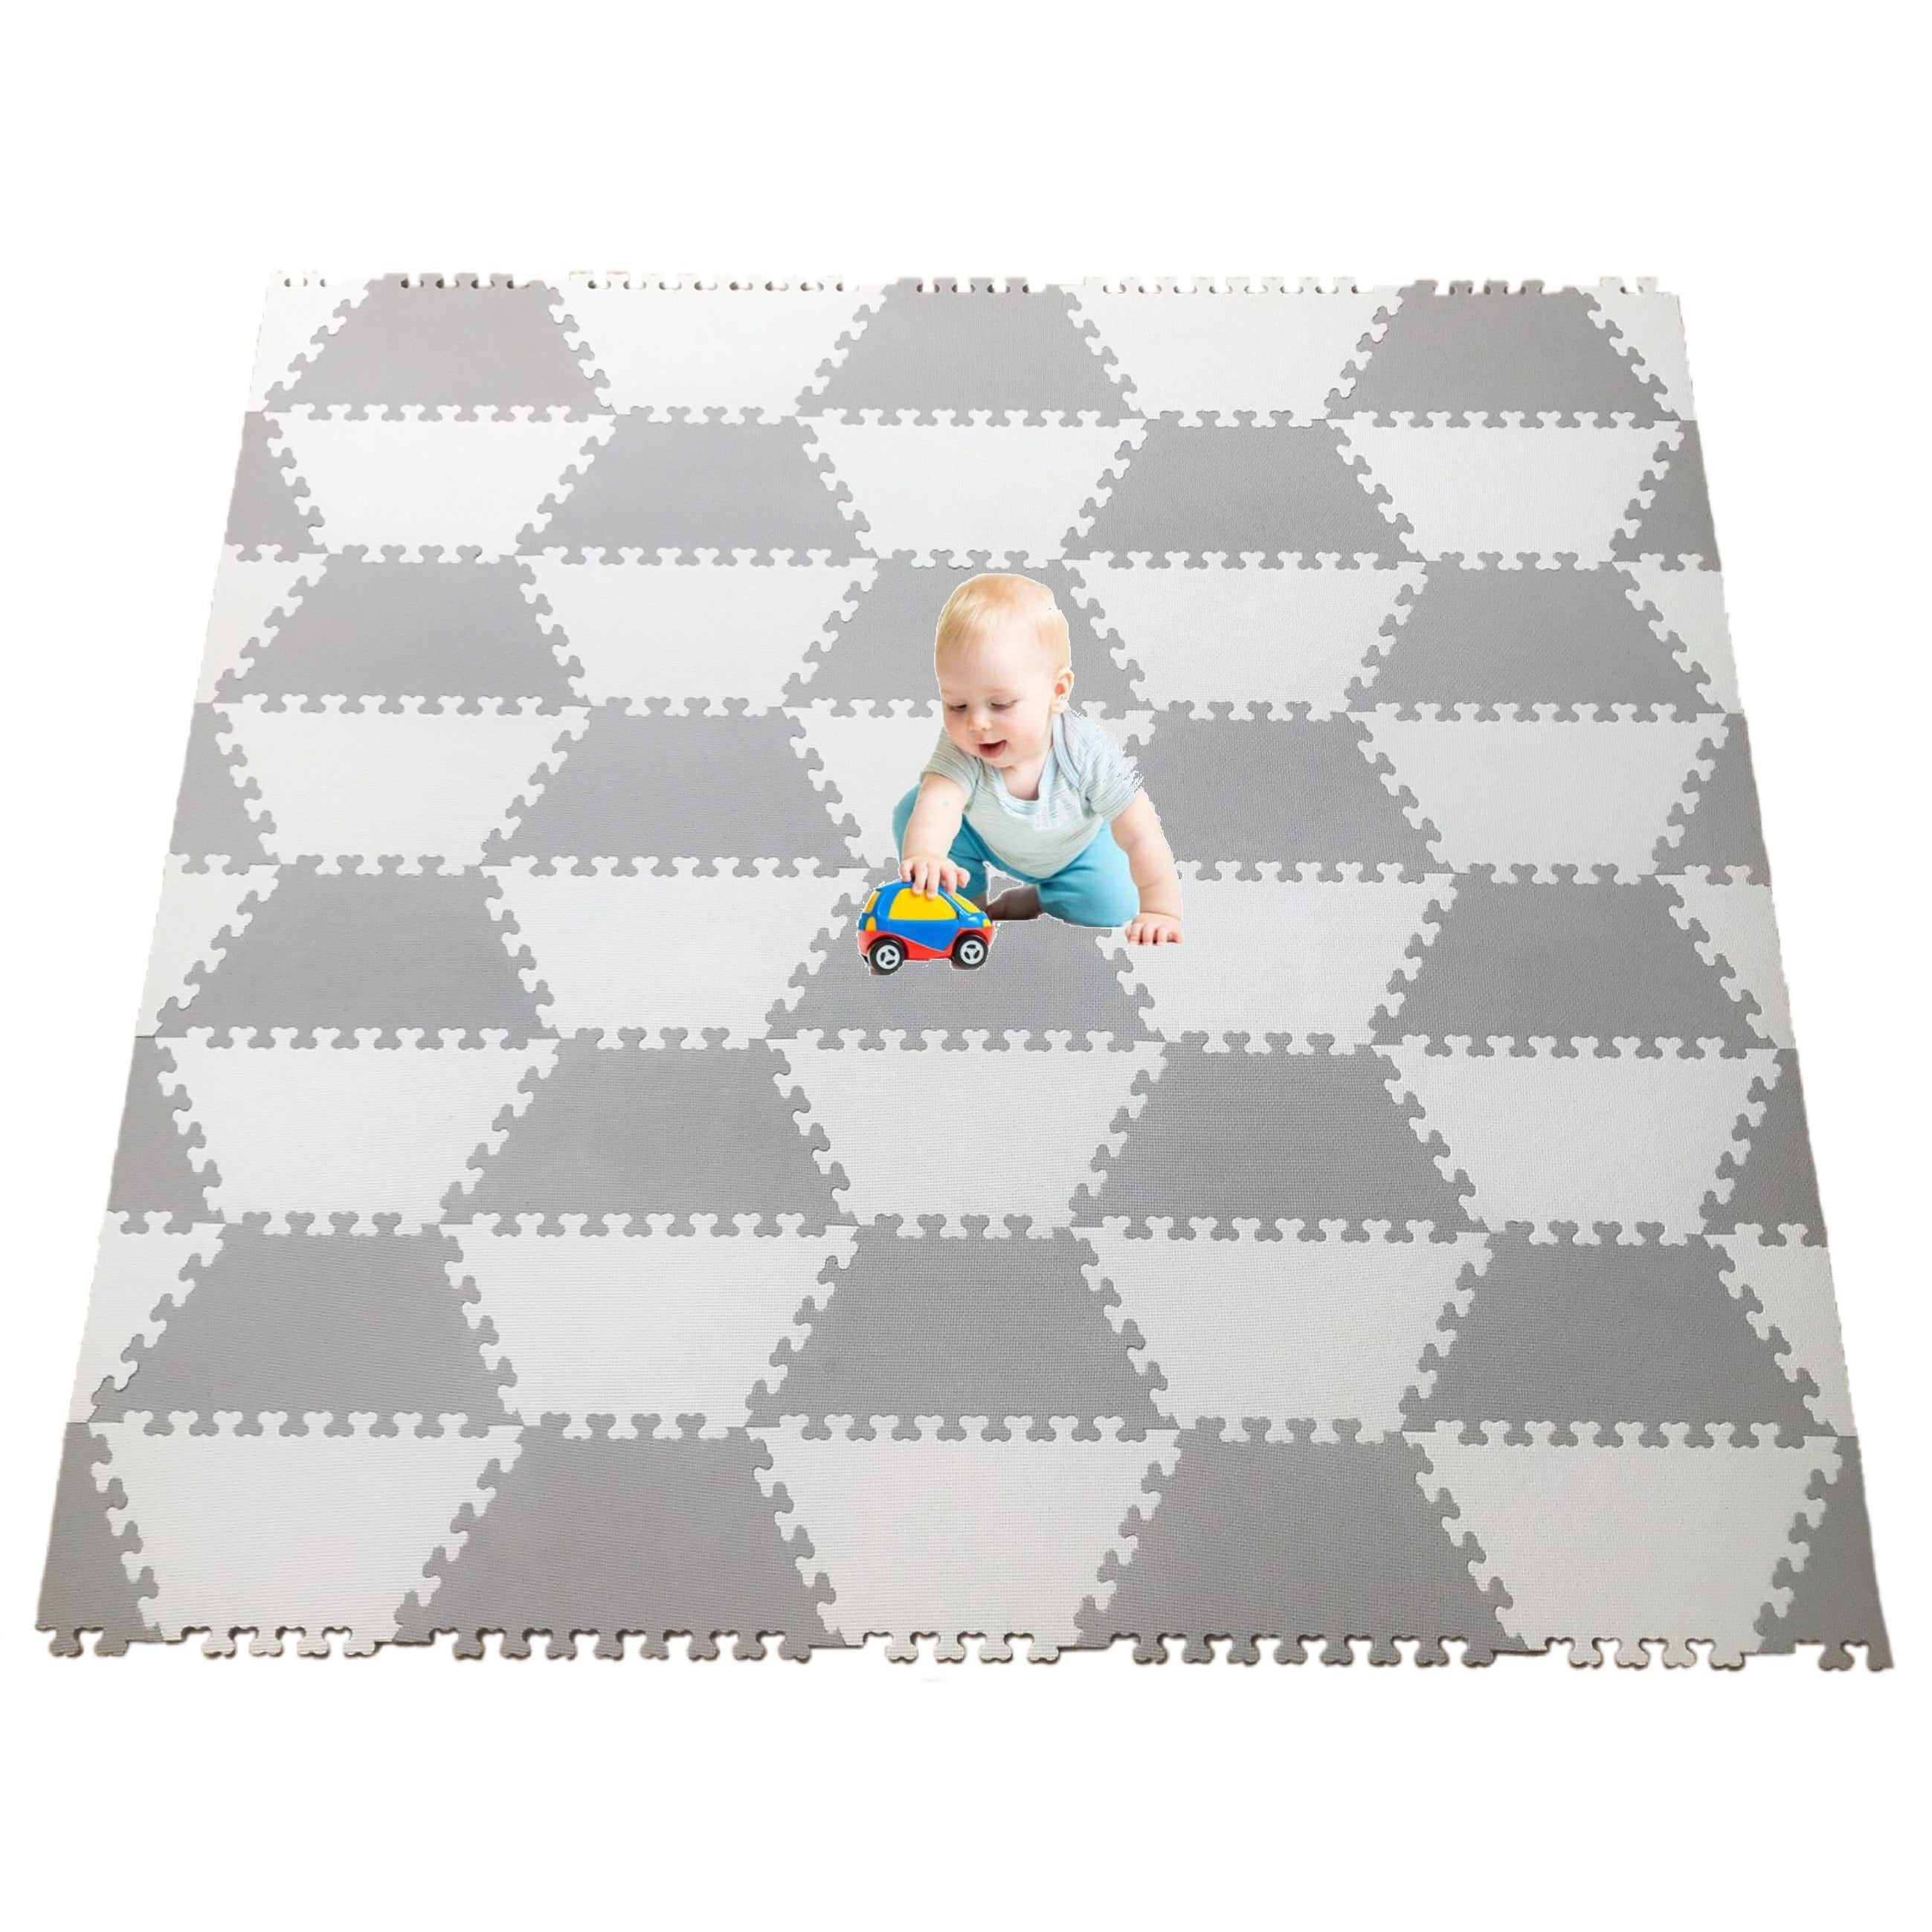 Bulk-buy 16PCS Interlocking Foam Mats, Fluffy Carpet Tiles Plush Area Rug  Interlocking Floor Tiles Soft Baby Playmat Puzzle Floor Mat, Coffee Color  price comparison